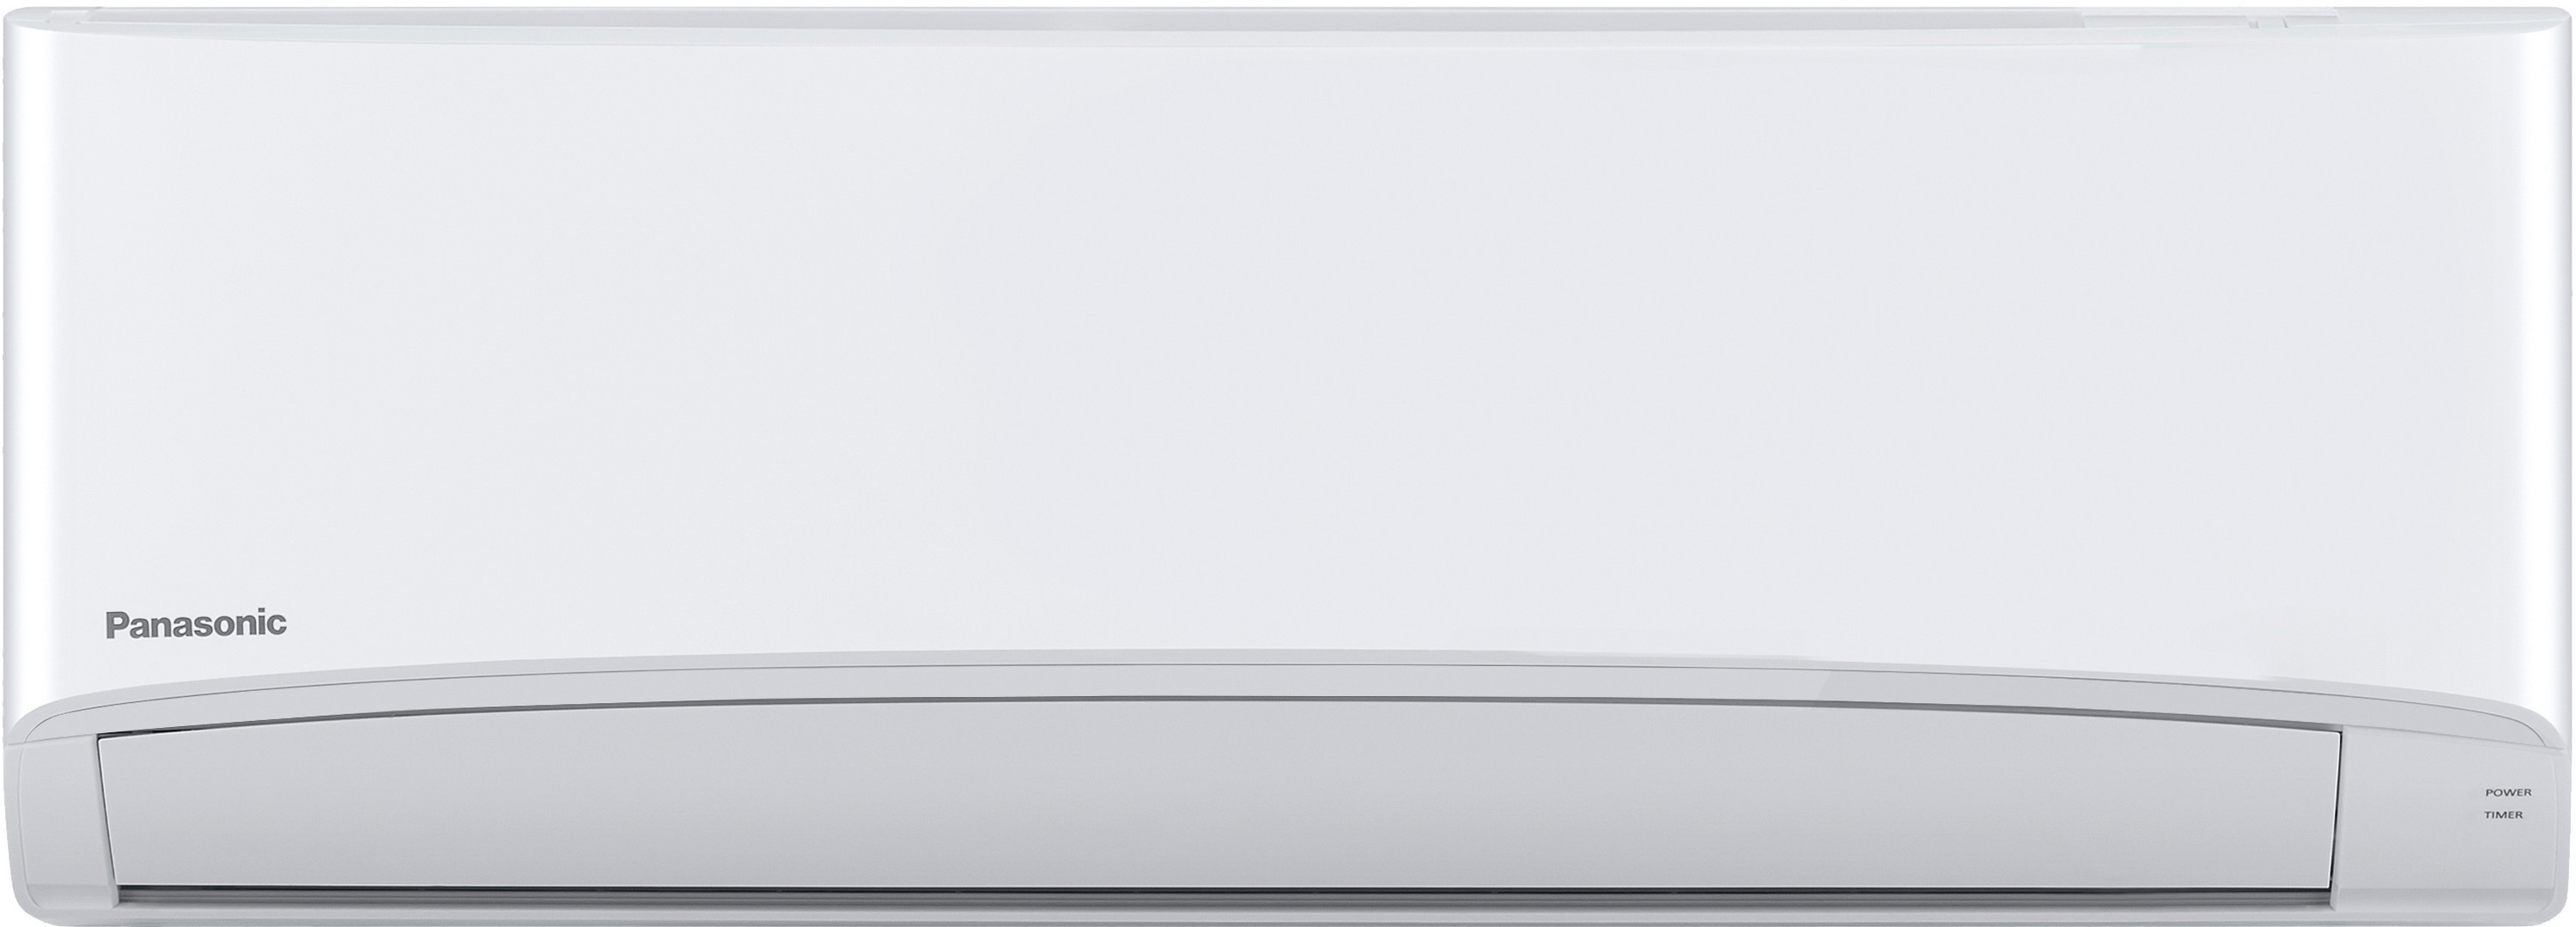 Кондиционер сплит-система Panasonic Compact Inverter CS/CU-TZ35TKEW-1 цена 31999.00 грн - фотография 2